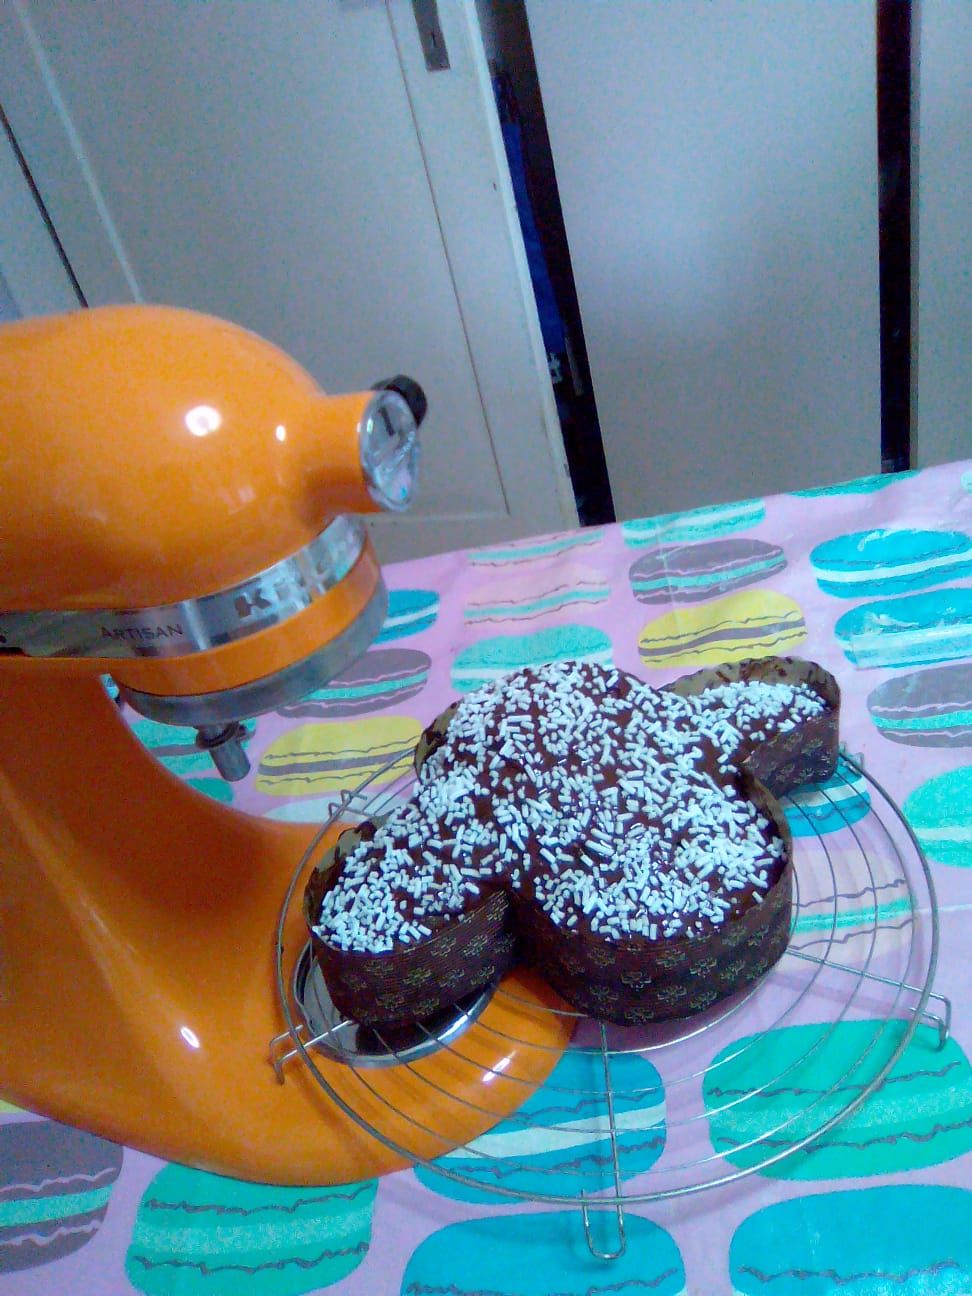 Robot da cucina Artisan da 4,8 Lt Arancione 5KSM175PSETG